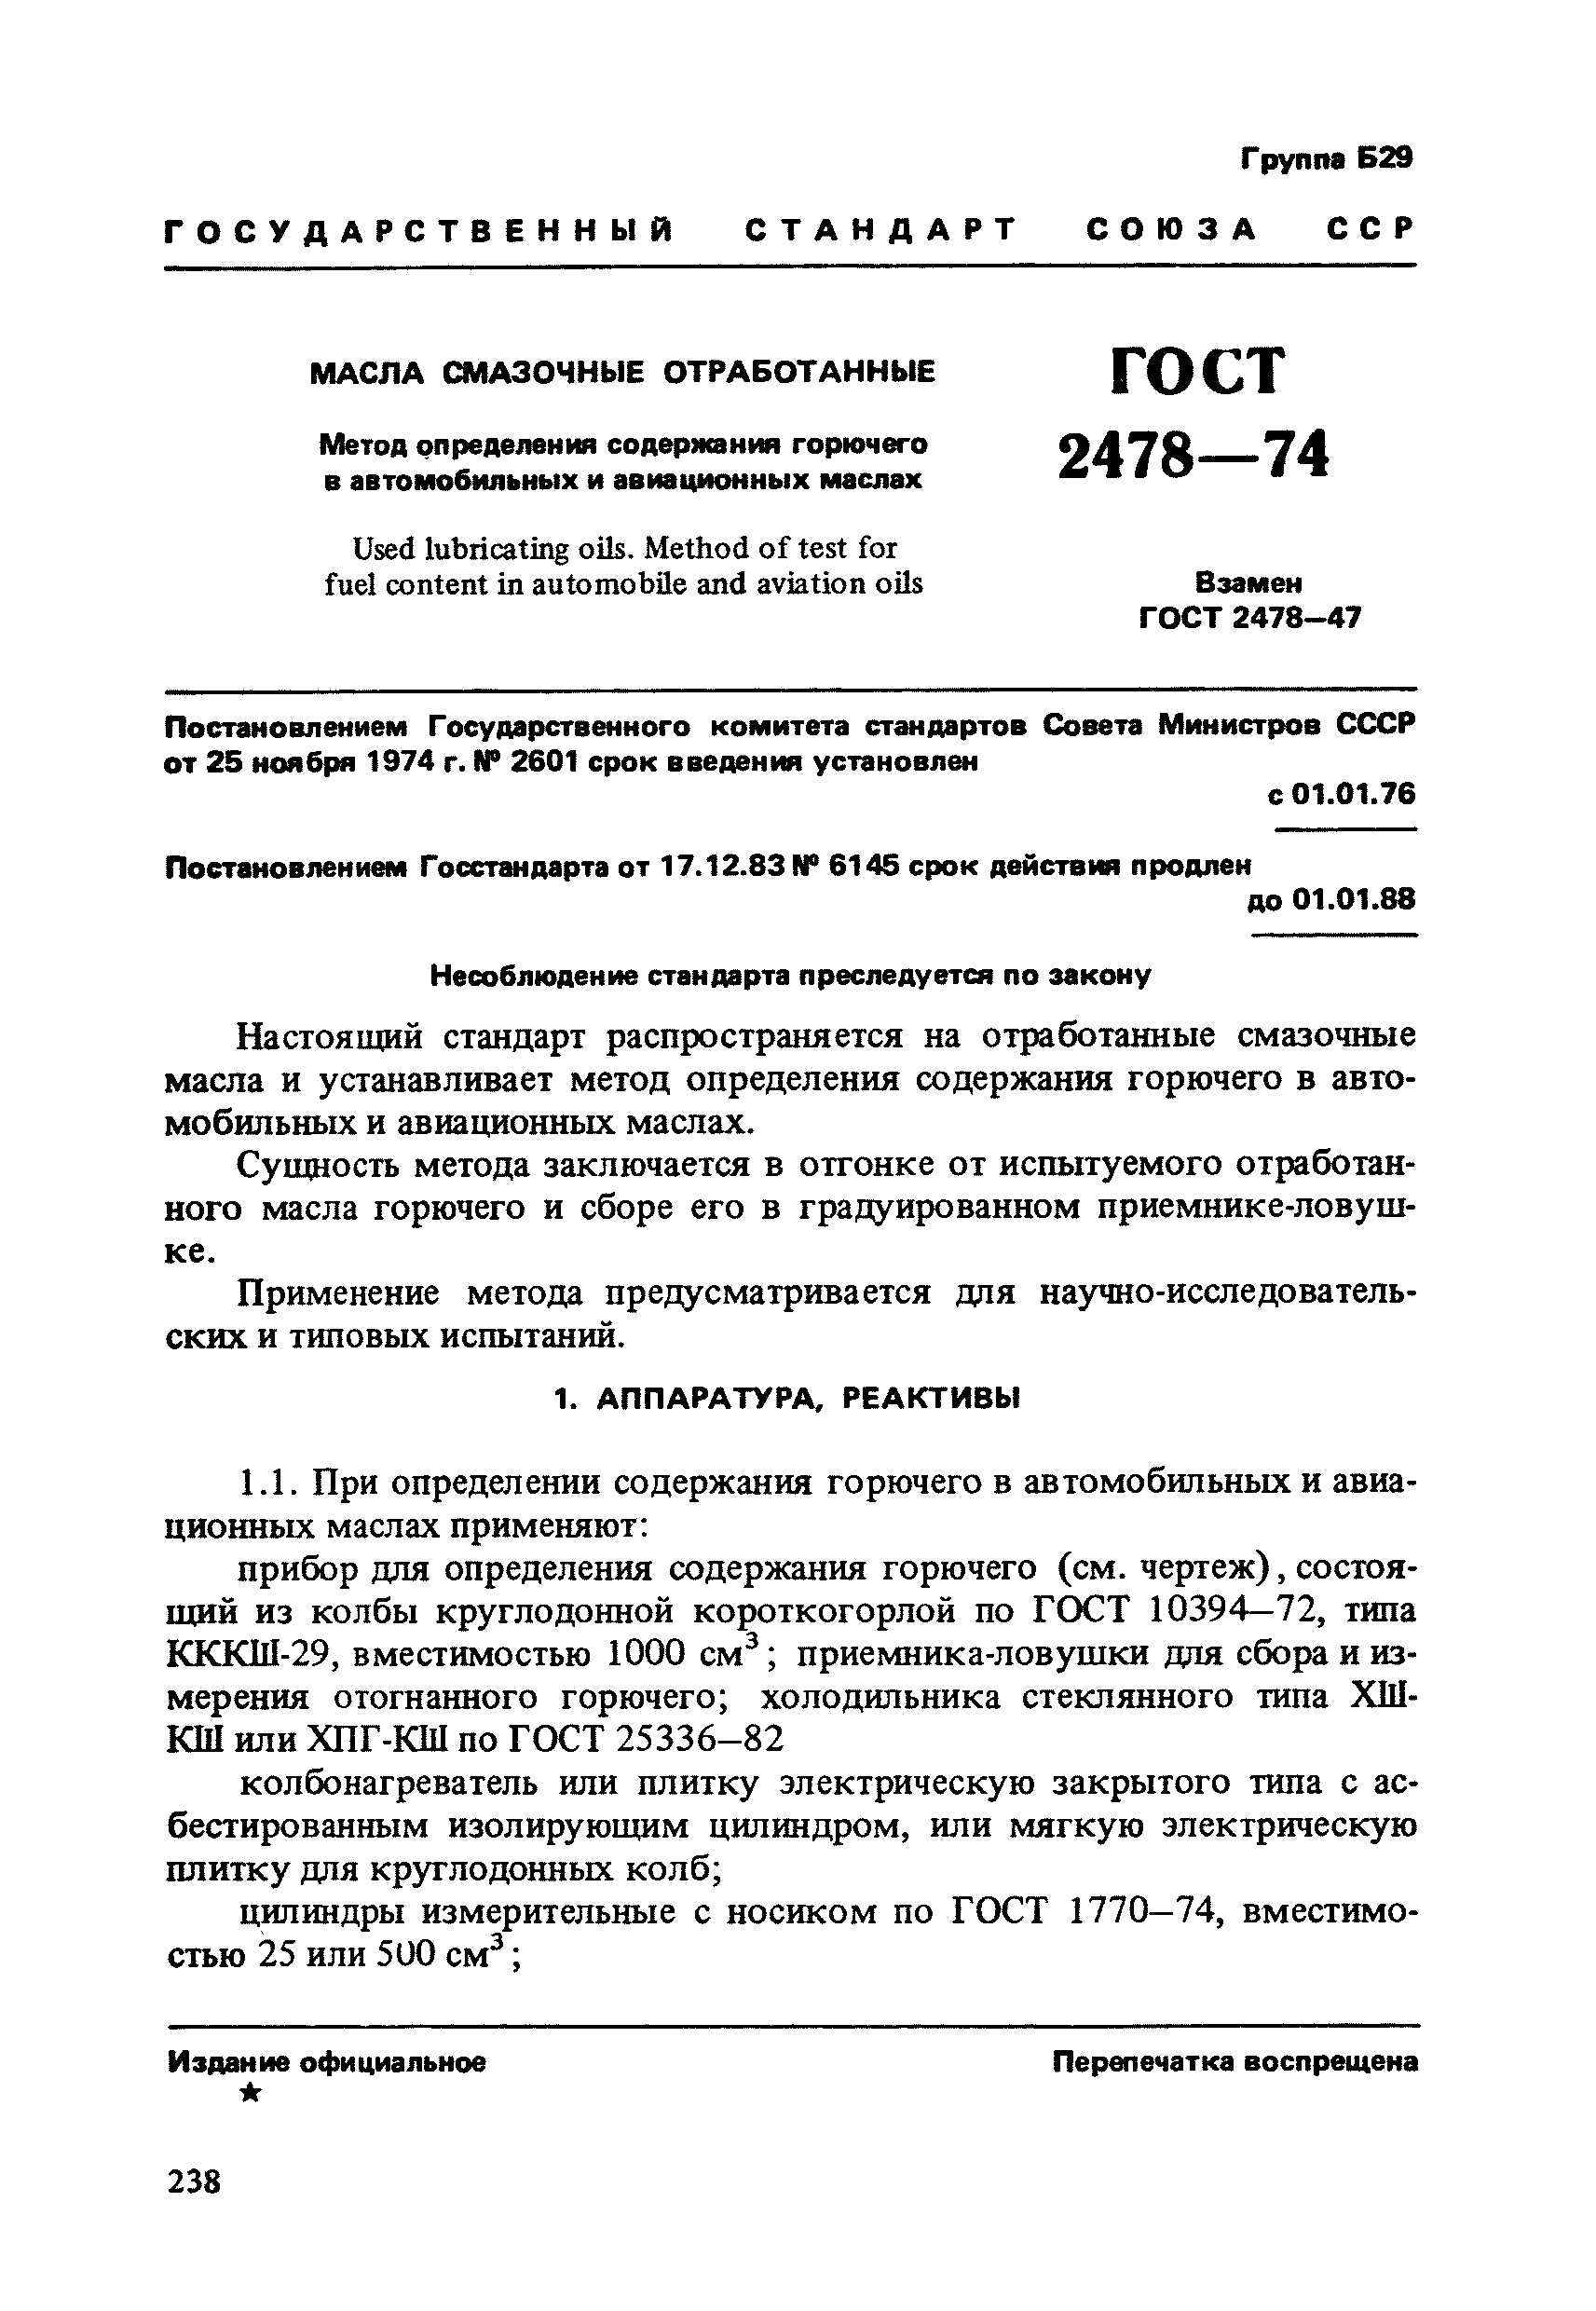 ГОСТ 2478-74